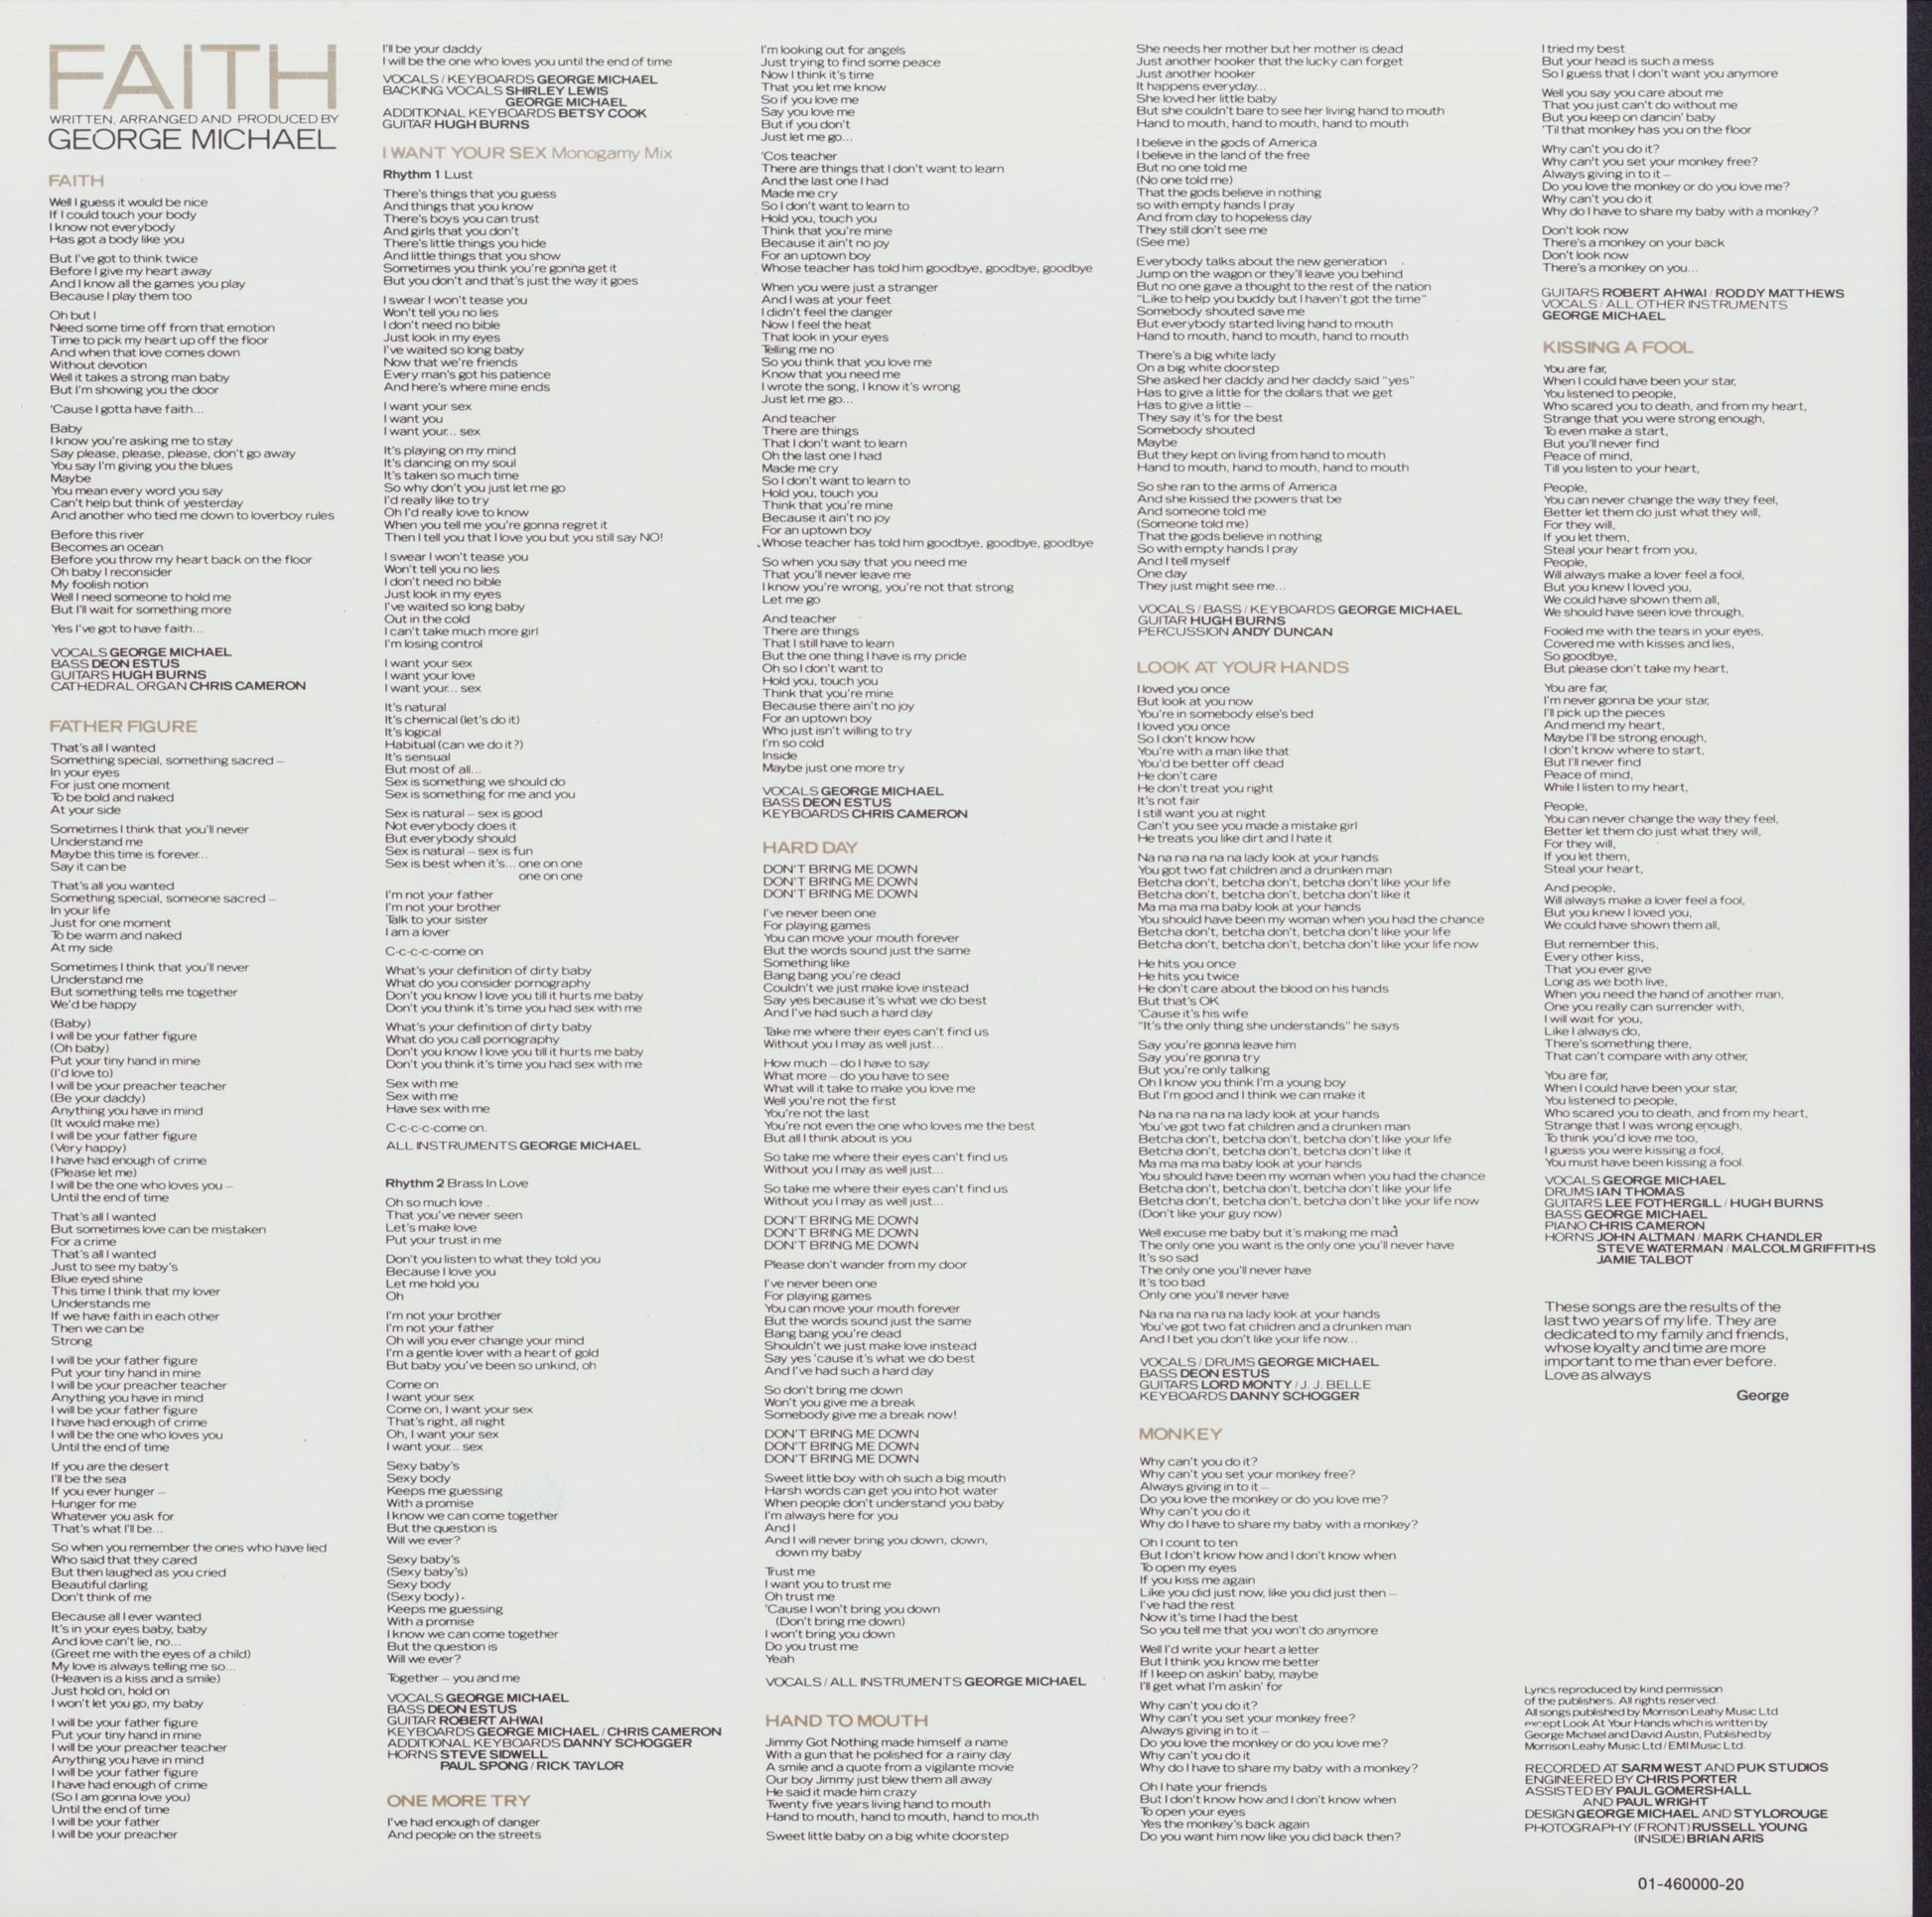 George Michael ‎- Faith Vinyl LP